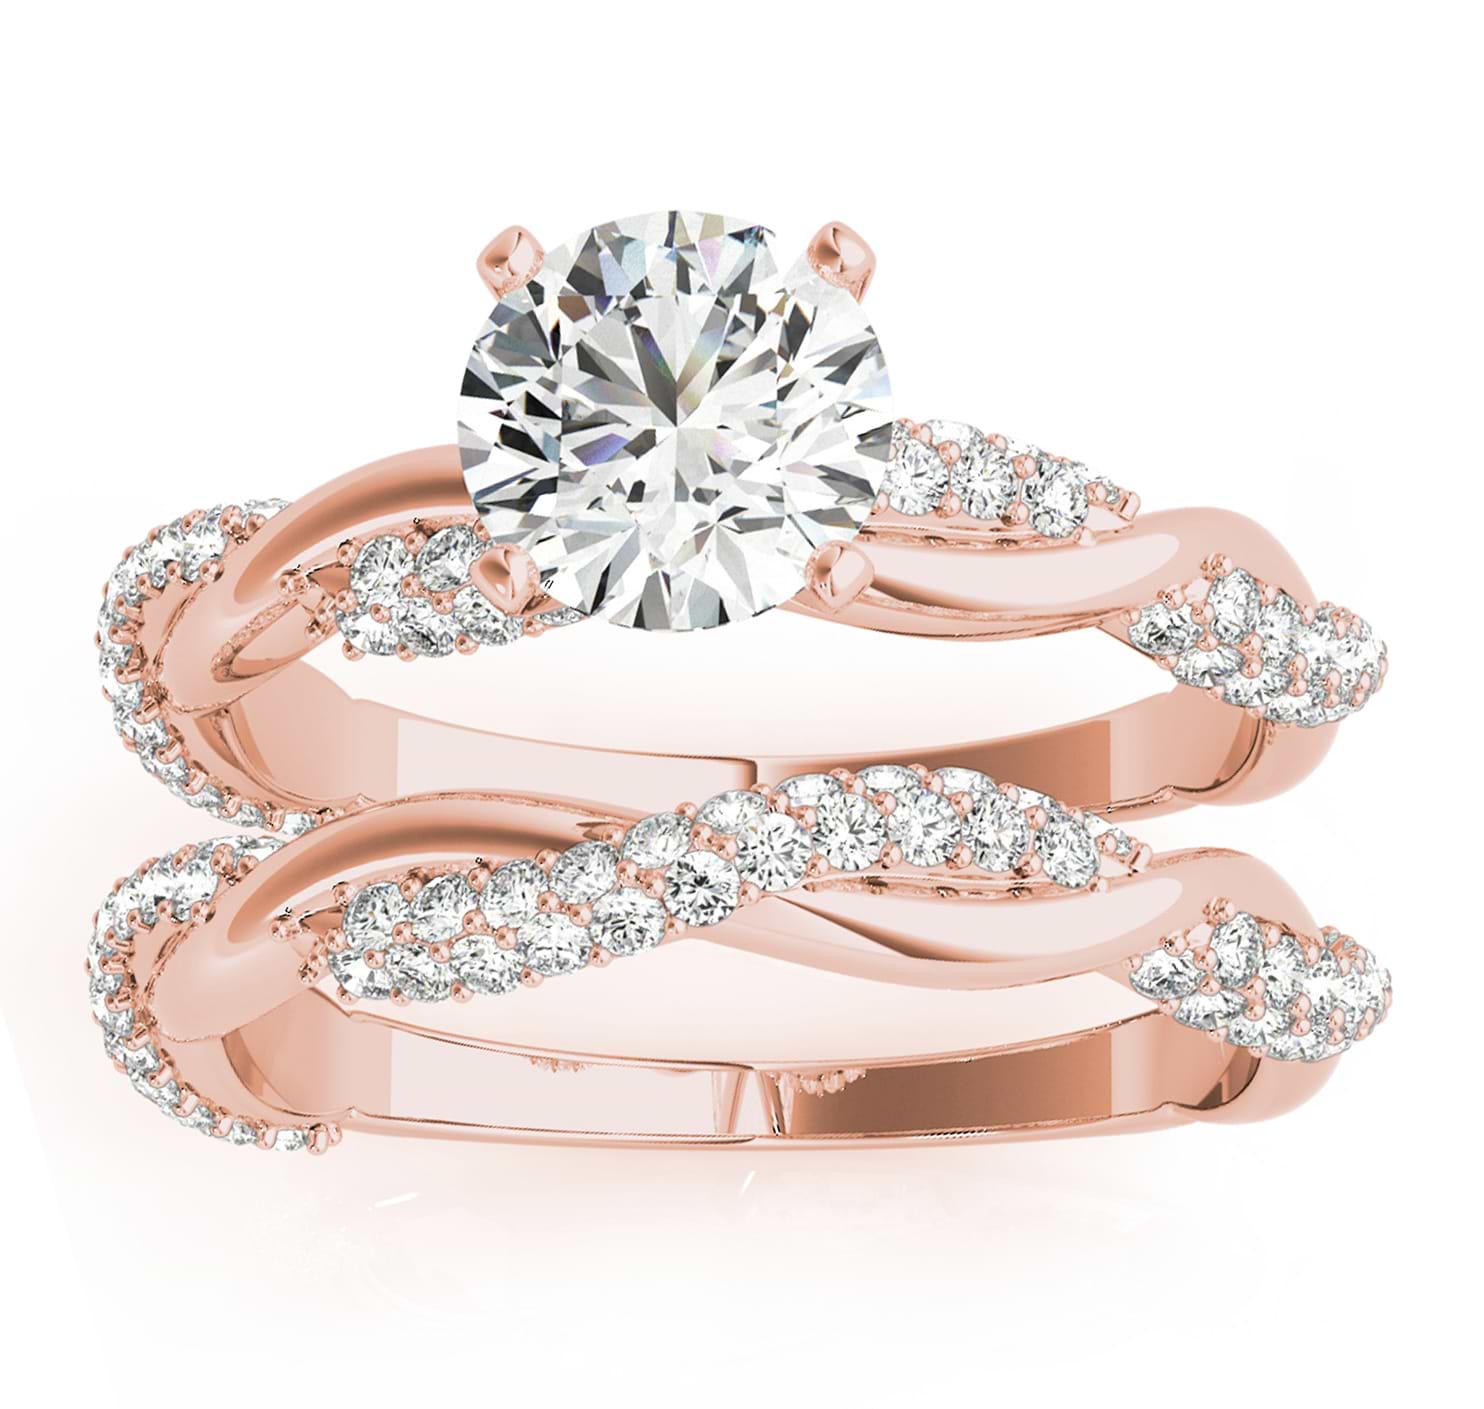 Infinity Twist Diamond Bridal Ring Set Setting 14k Rose Gold (0.80 ct)